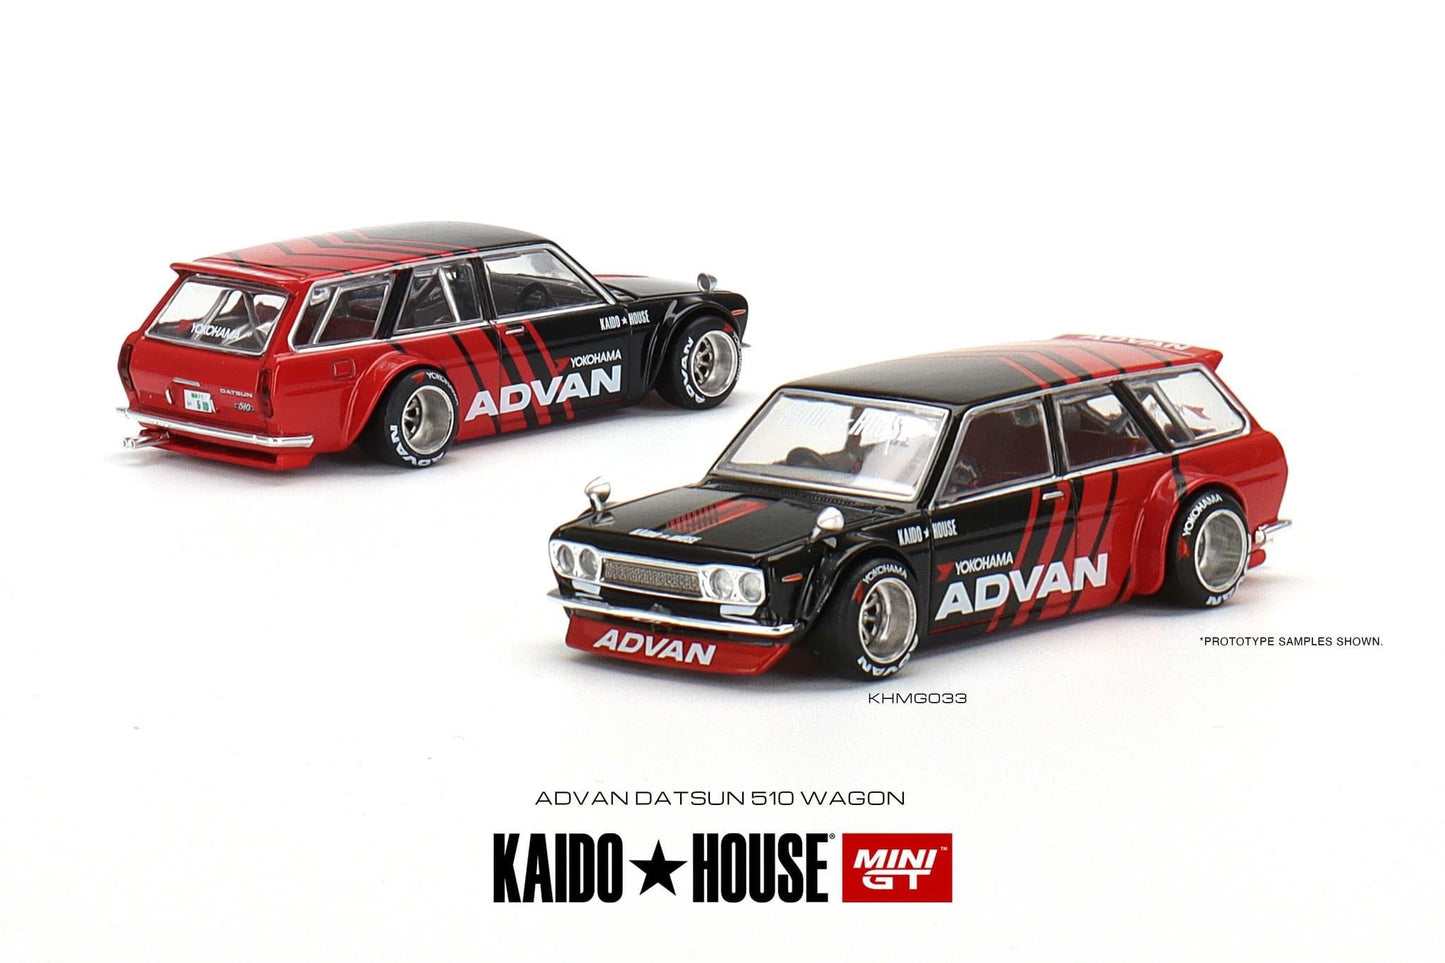 Mini GT x Kaido House 1:64 Datsun 510 Pro Street / Wagon Advan Normal Ver. / Chase Ver. Mini GT